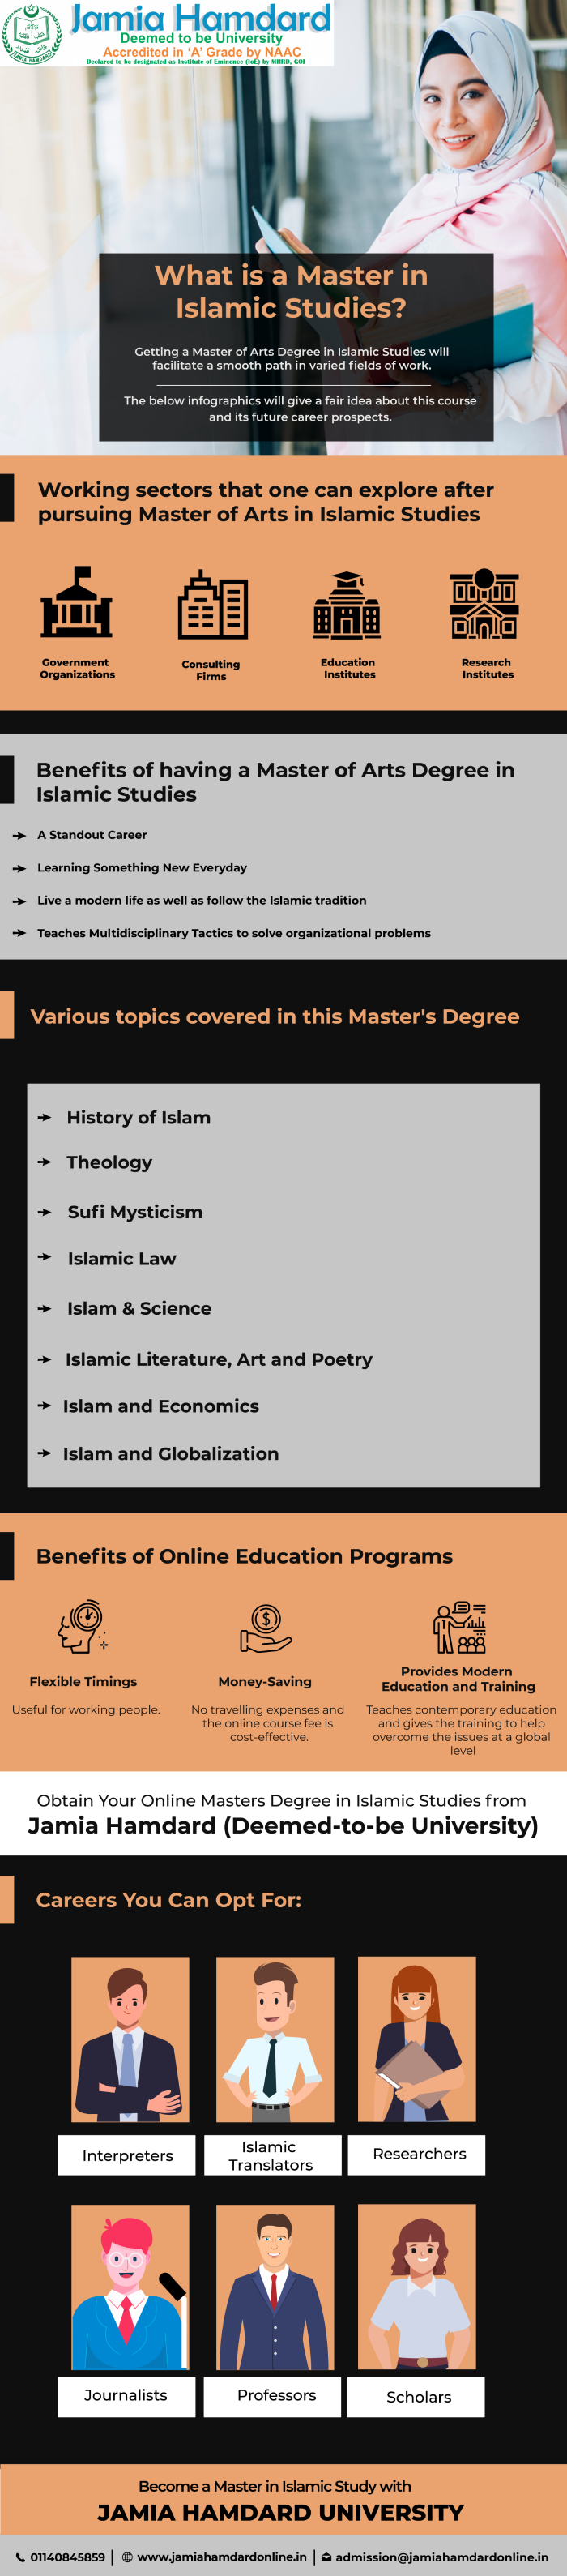 master-in-arts-islamic-studies